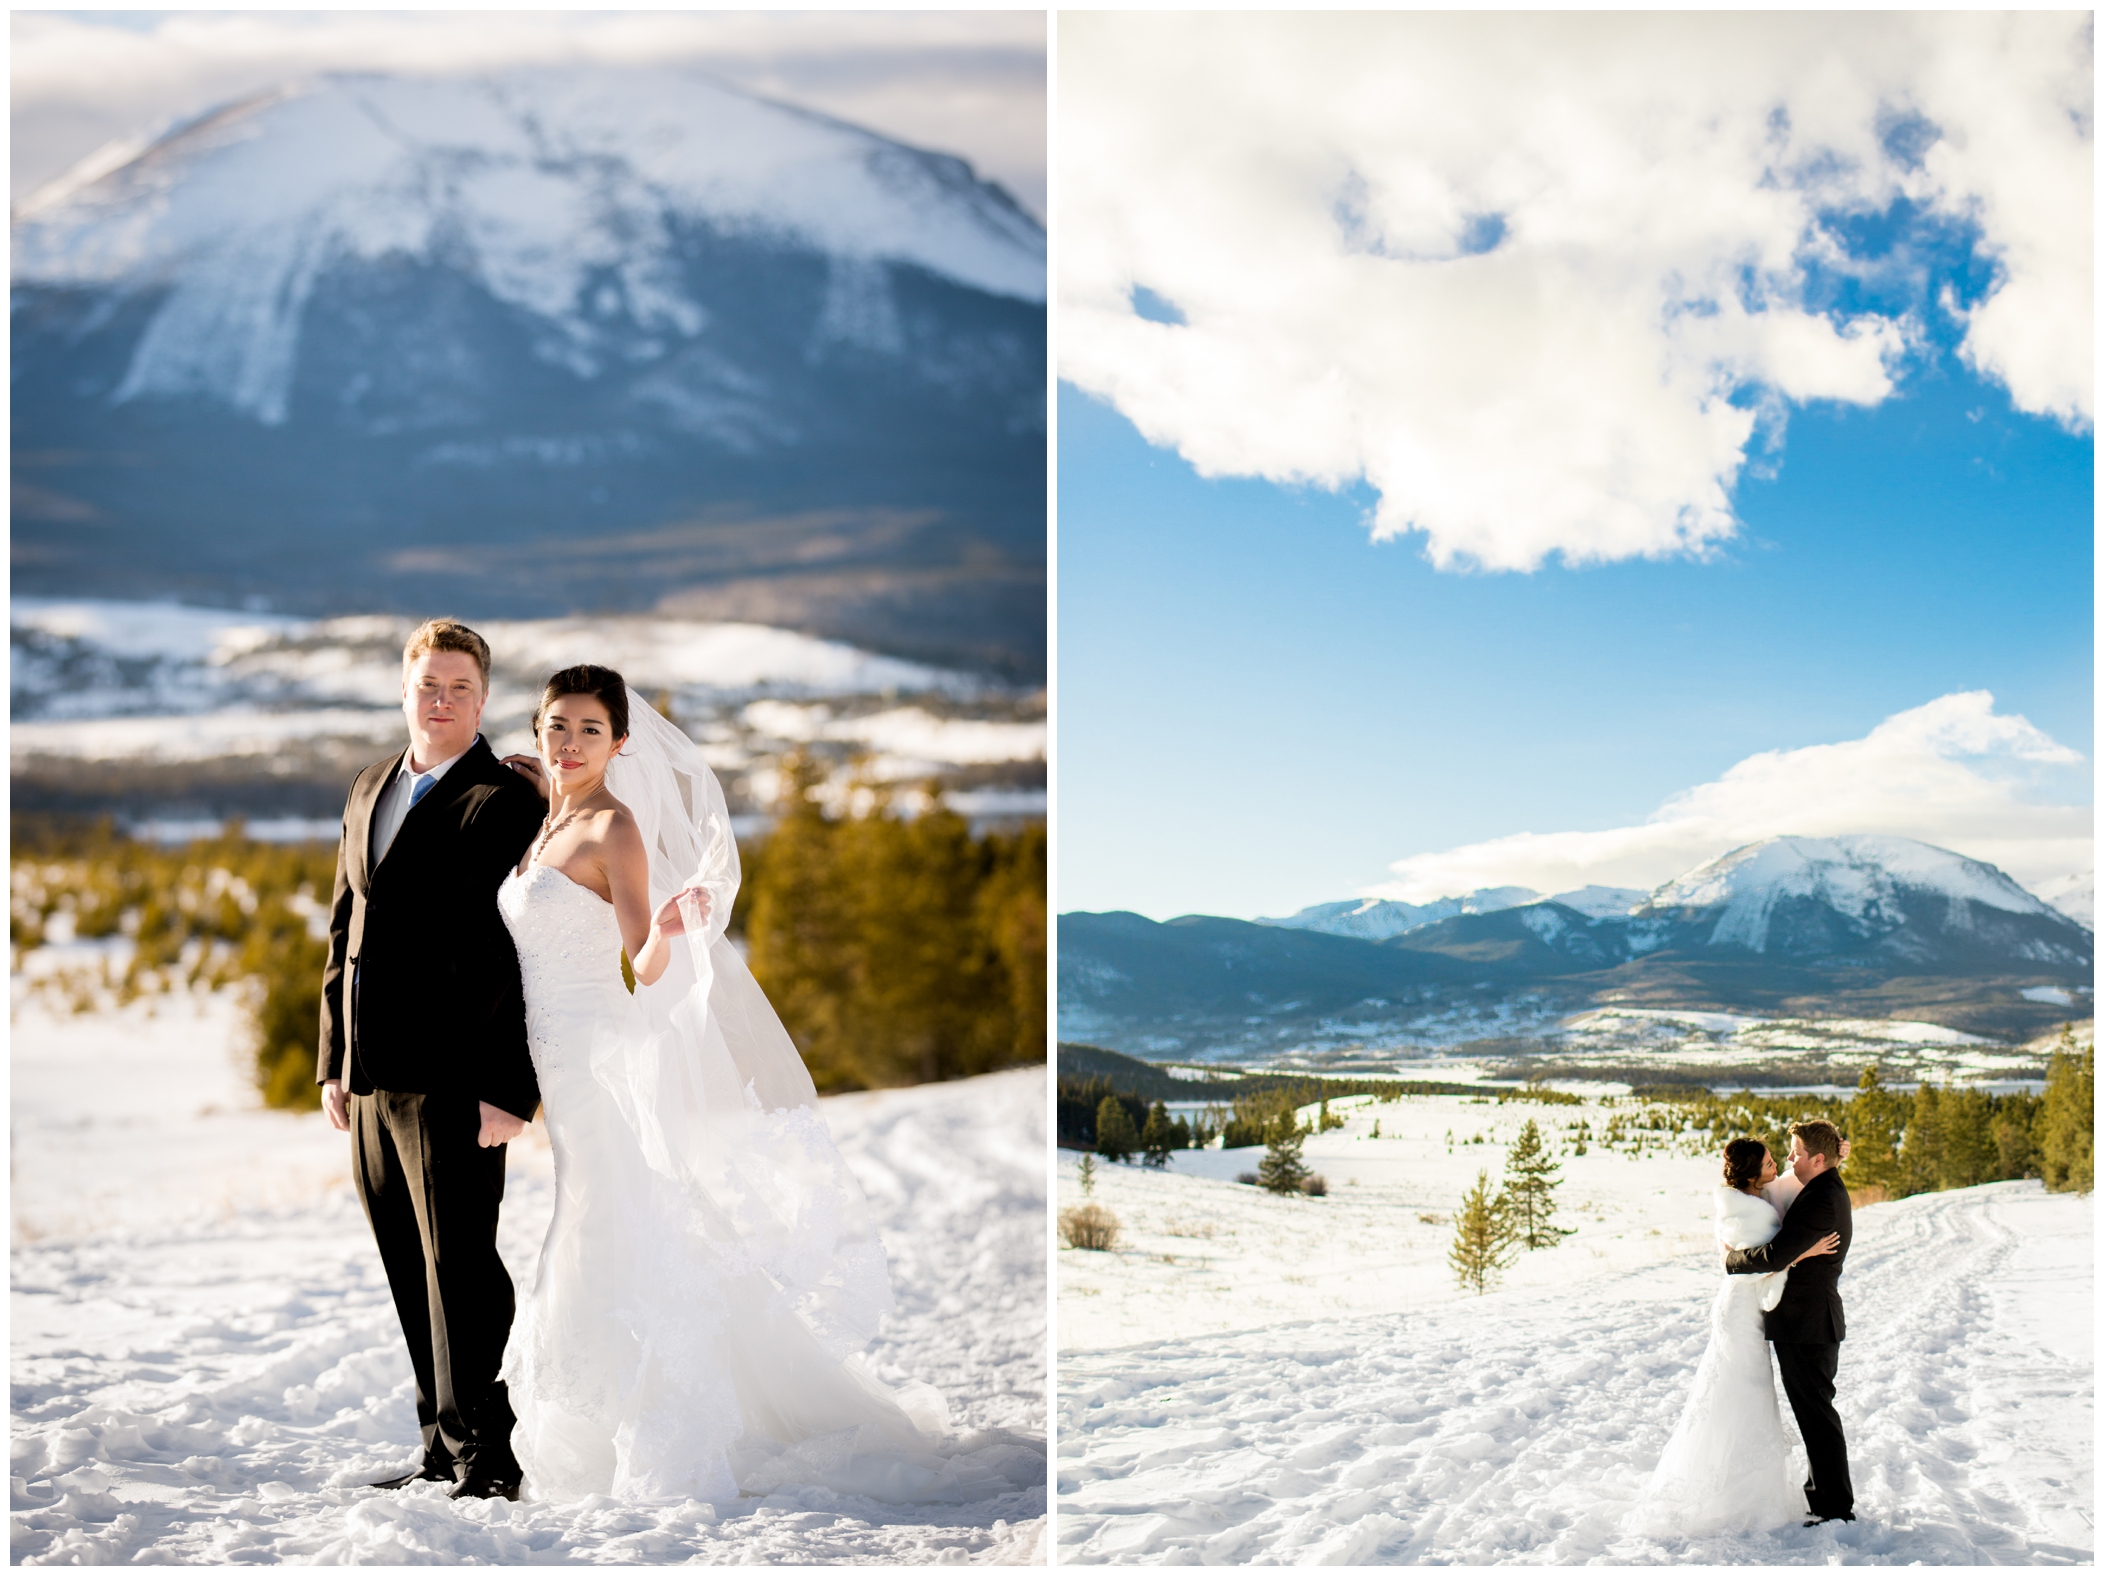 Breckenridge winter wedding photos by Plum Pretty Photography 